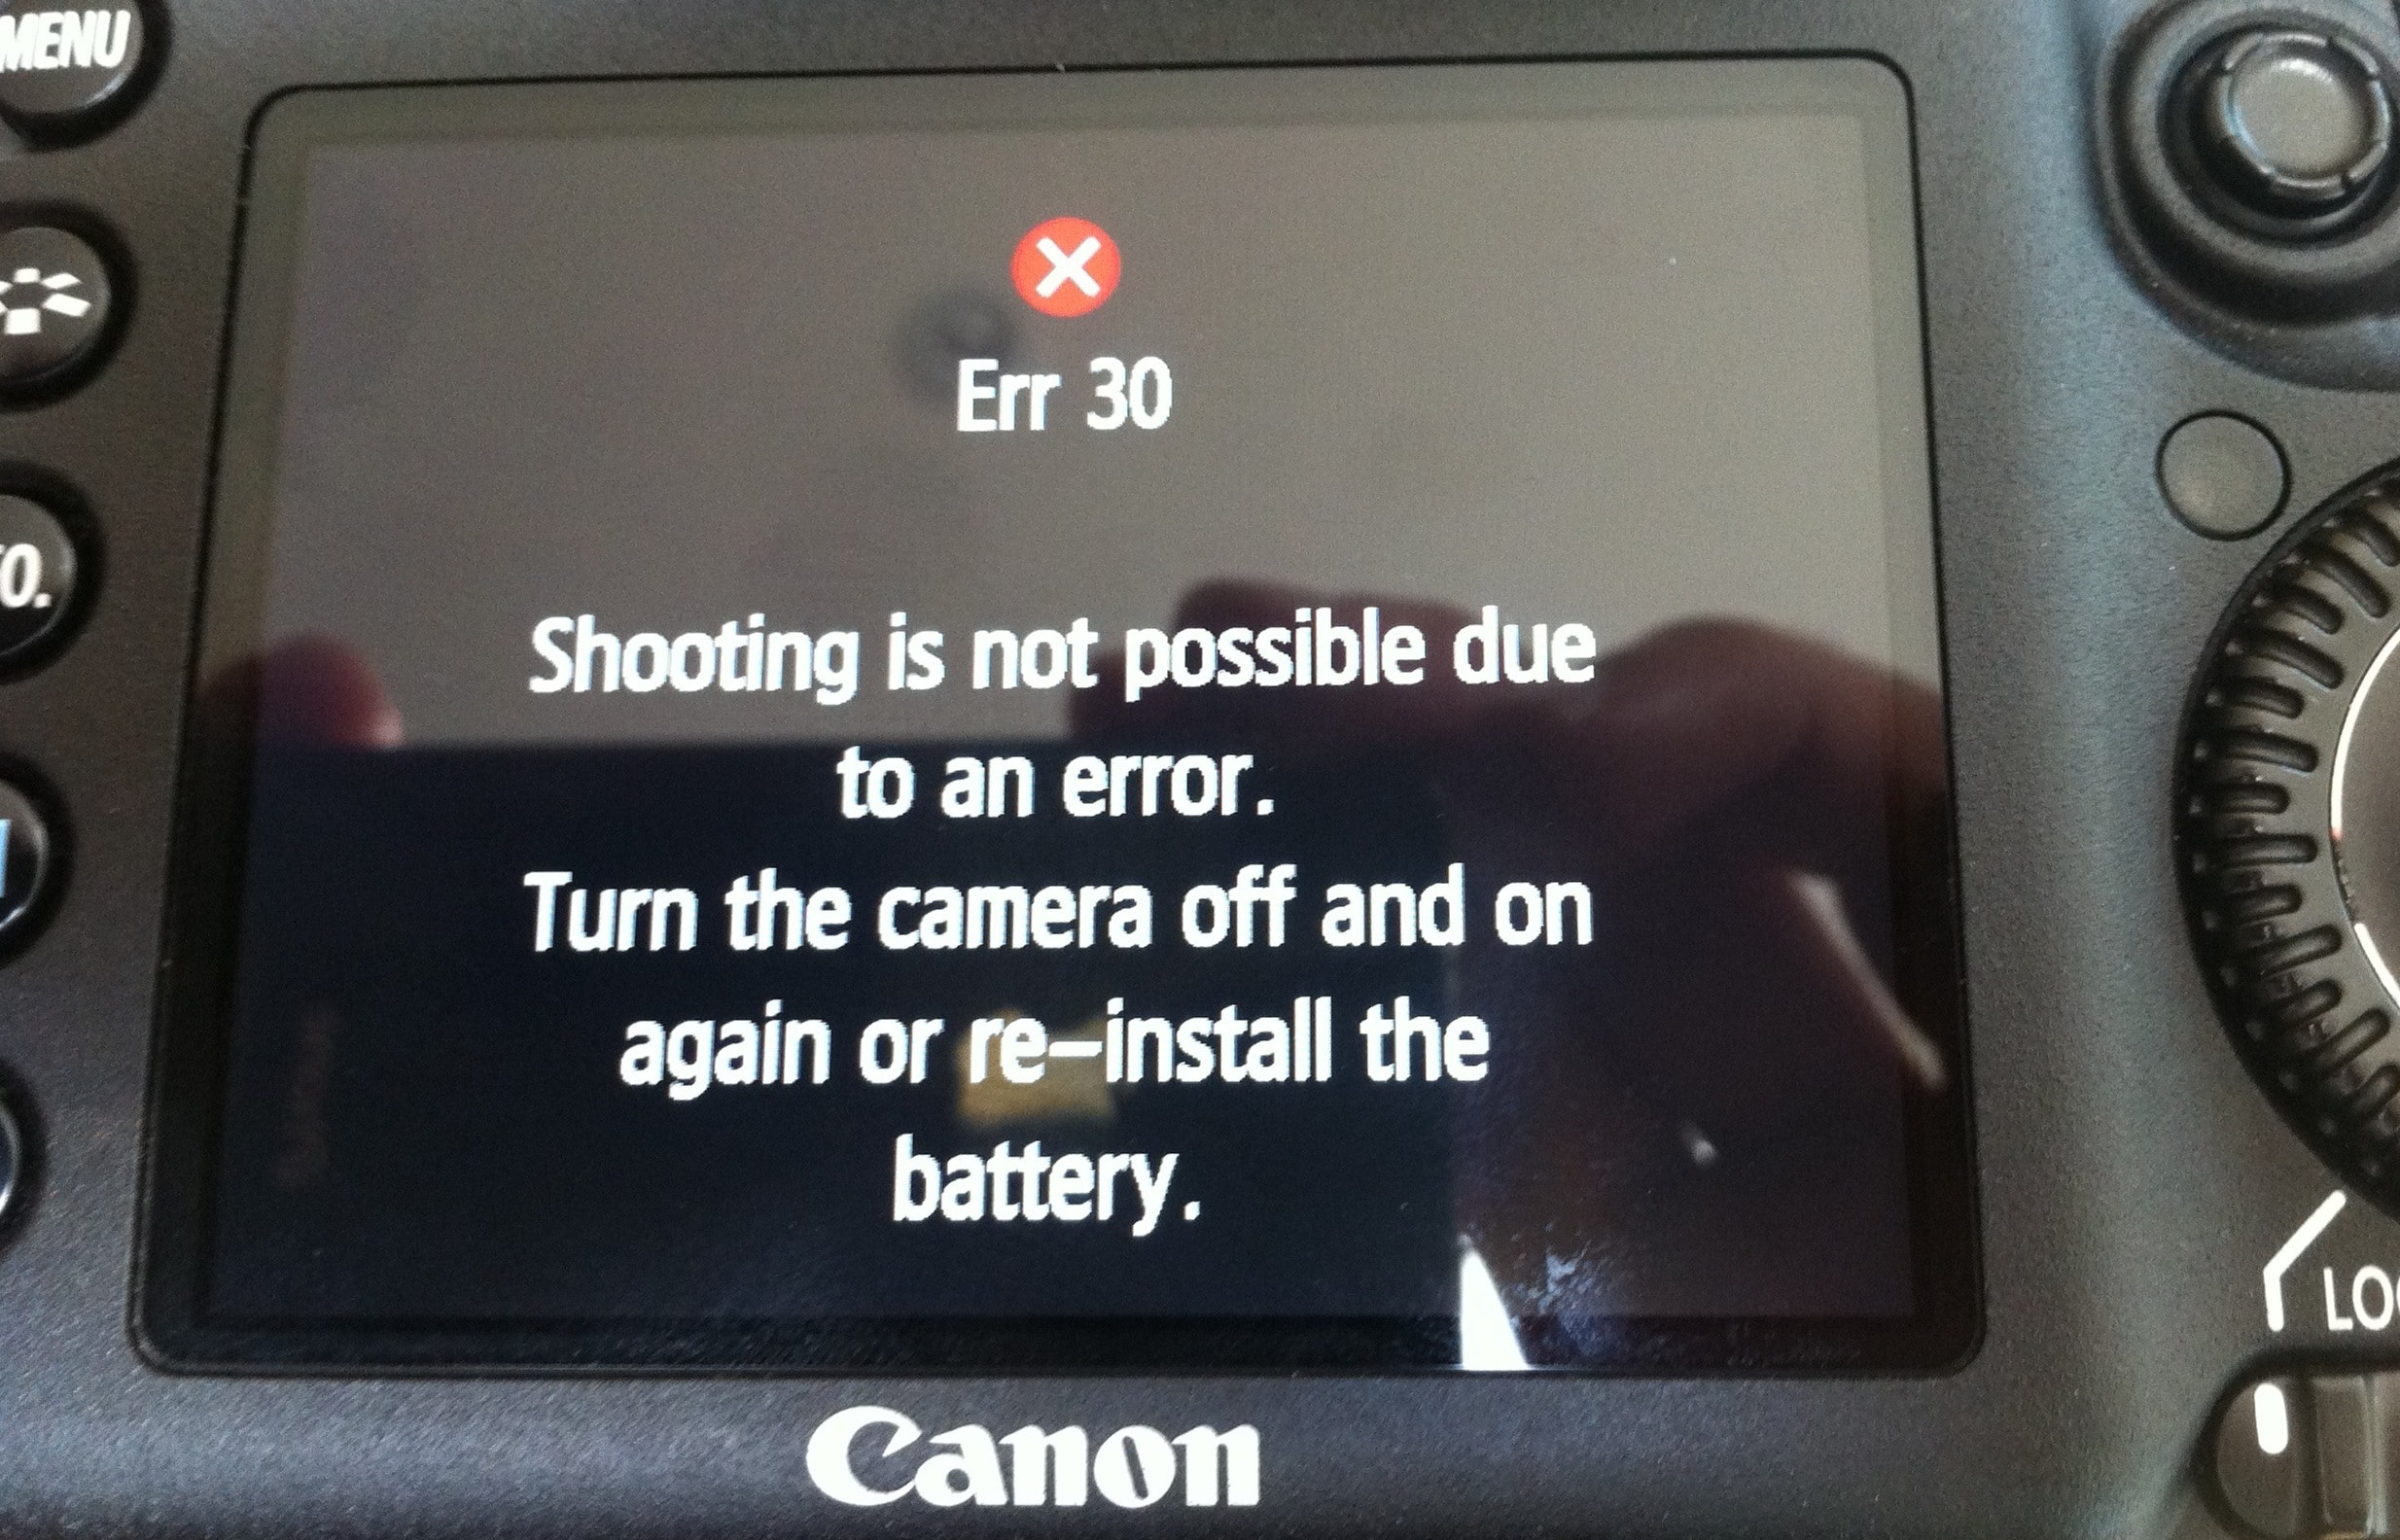 Err 30 message on Canon 7D